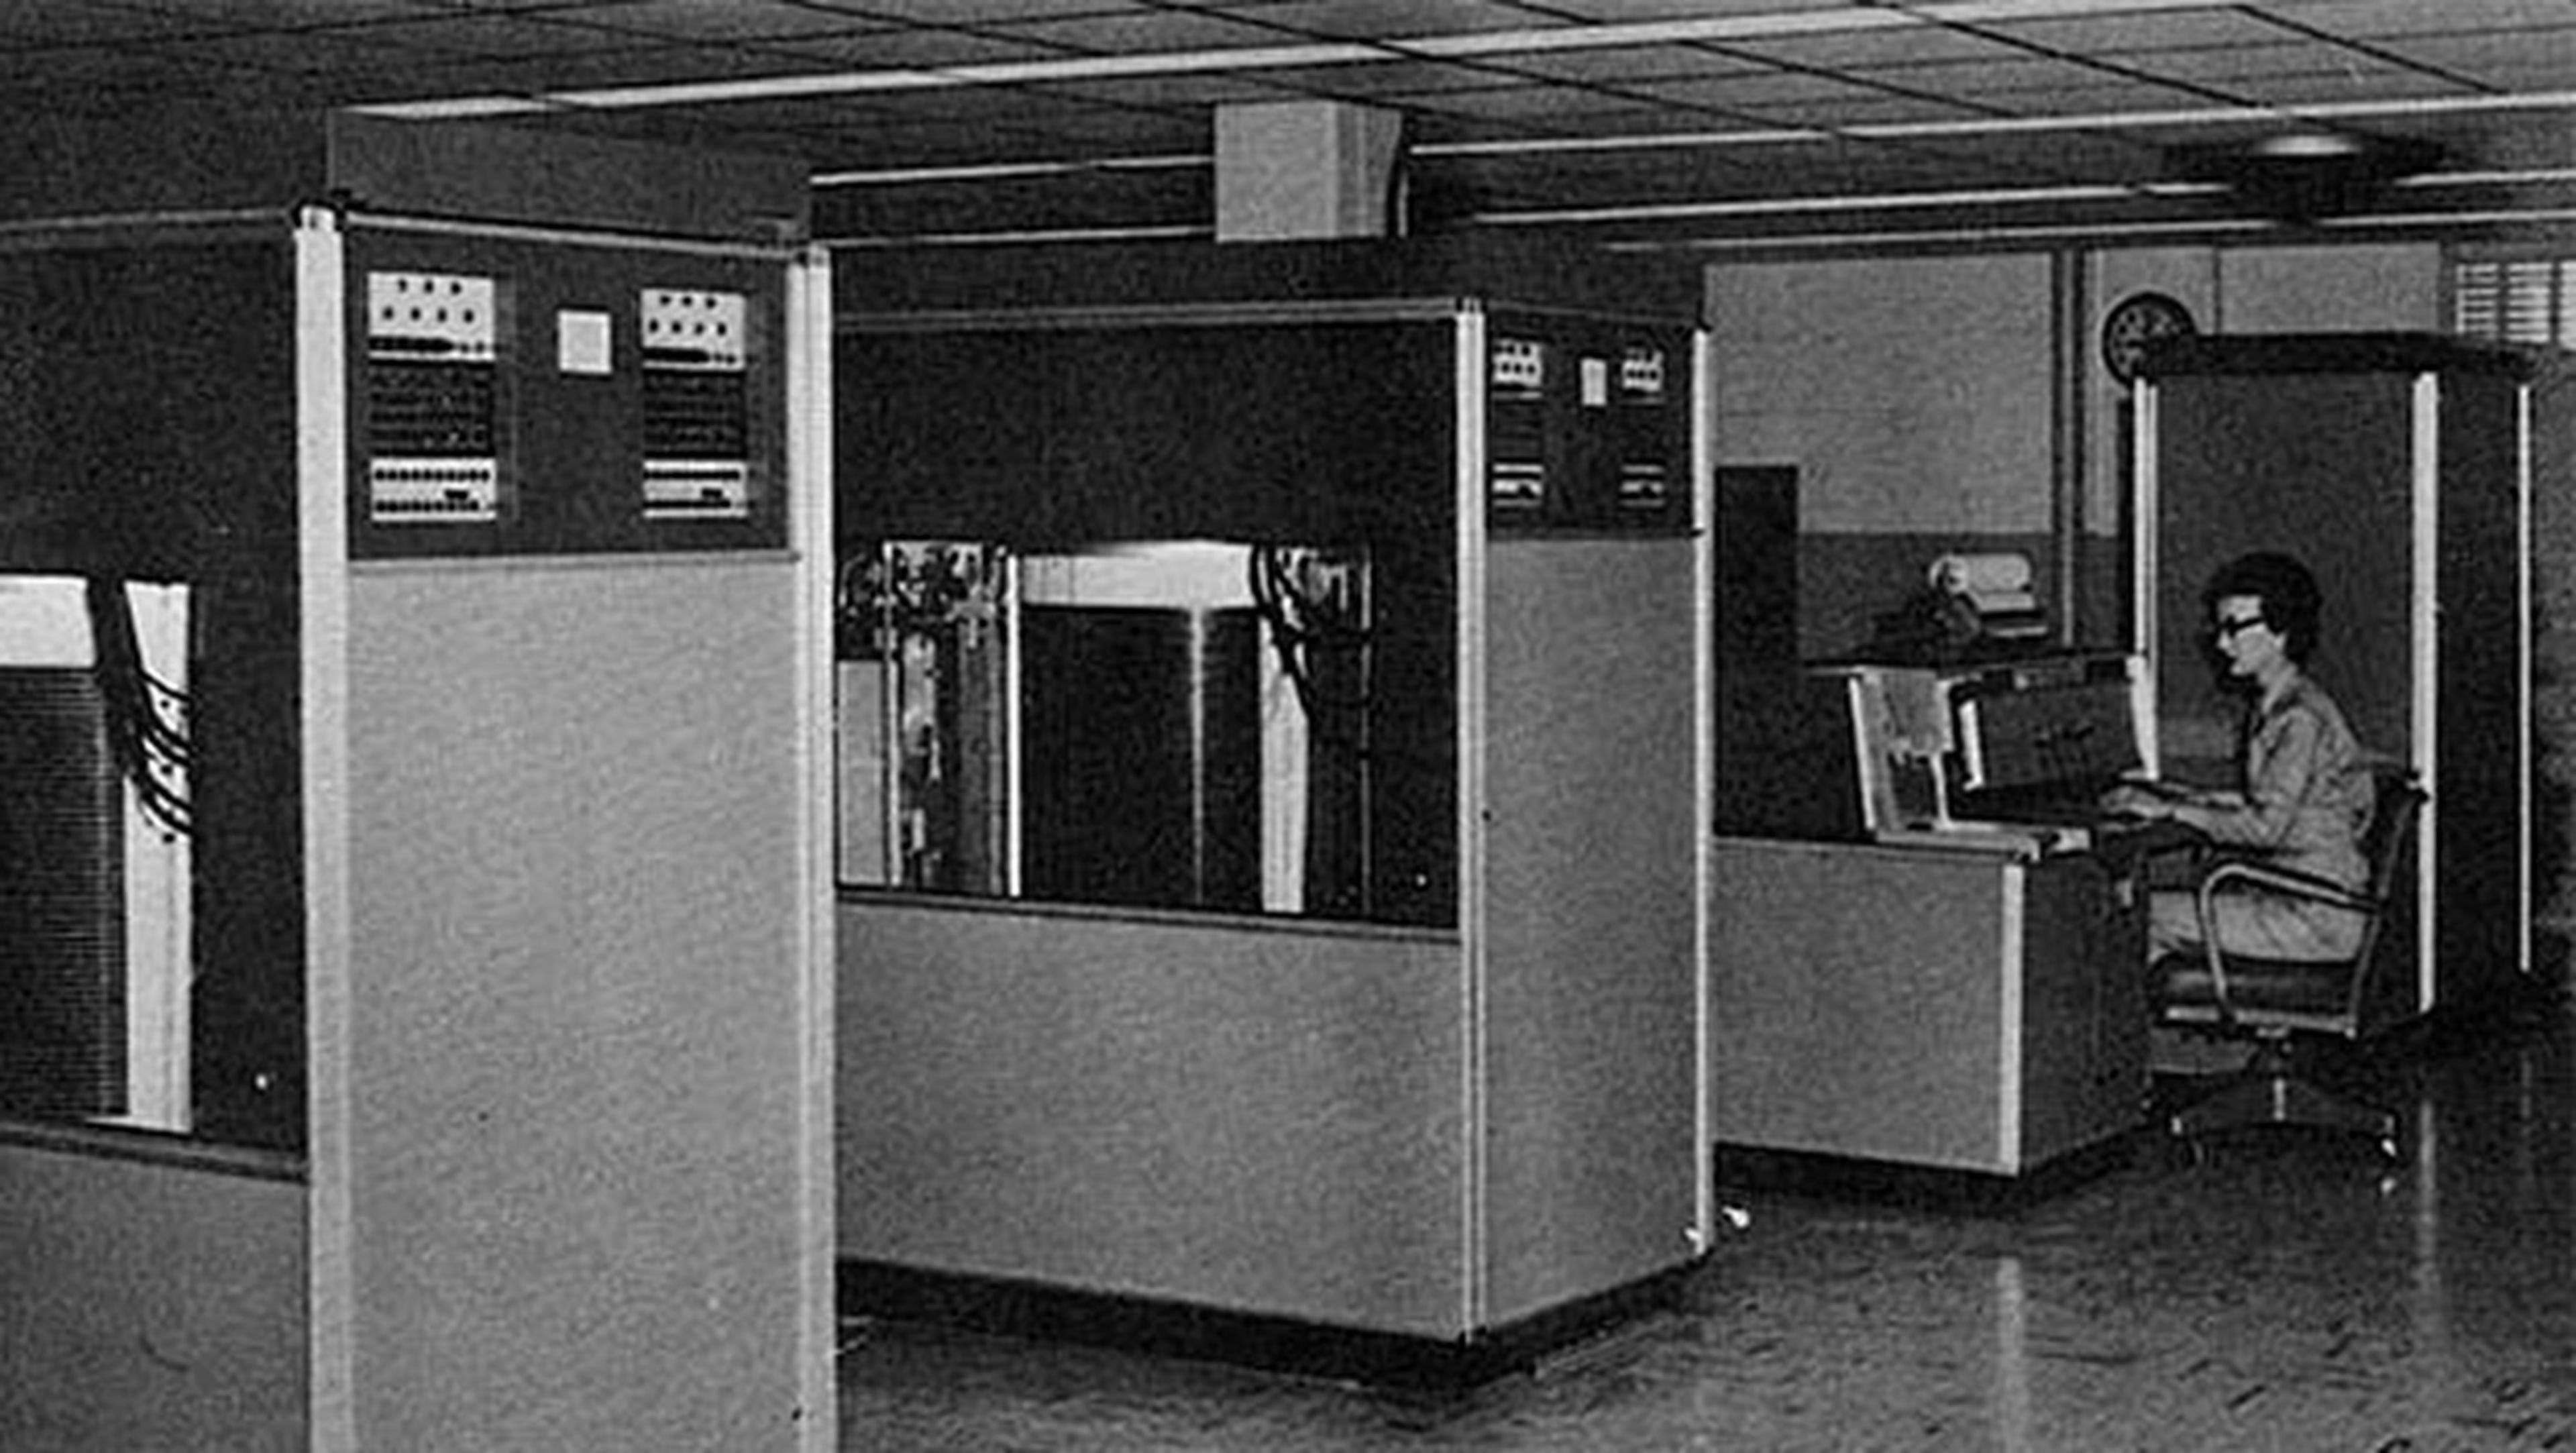 IBM RAMAC 305